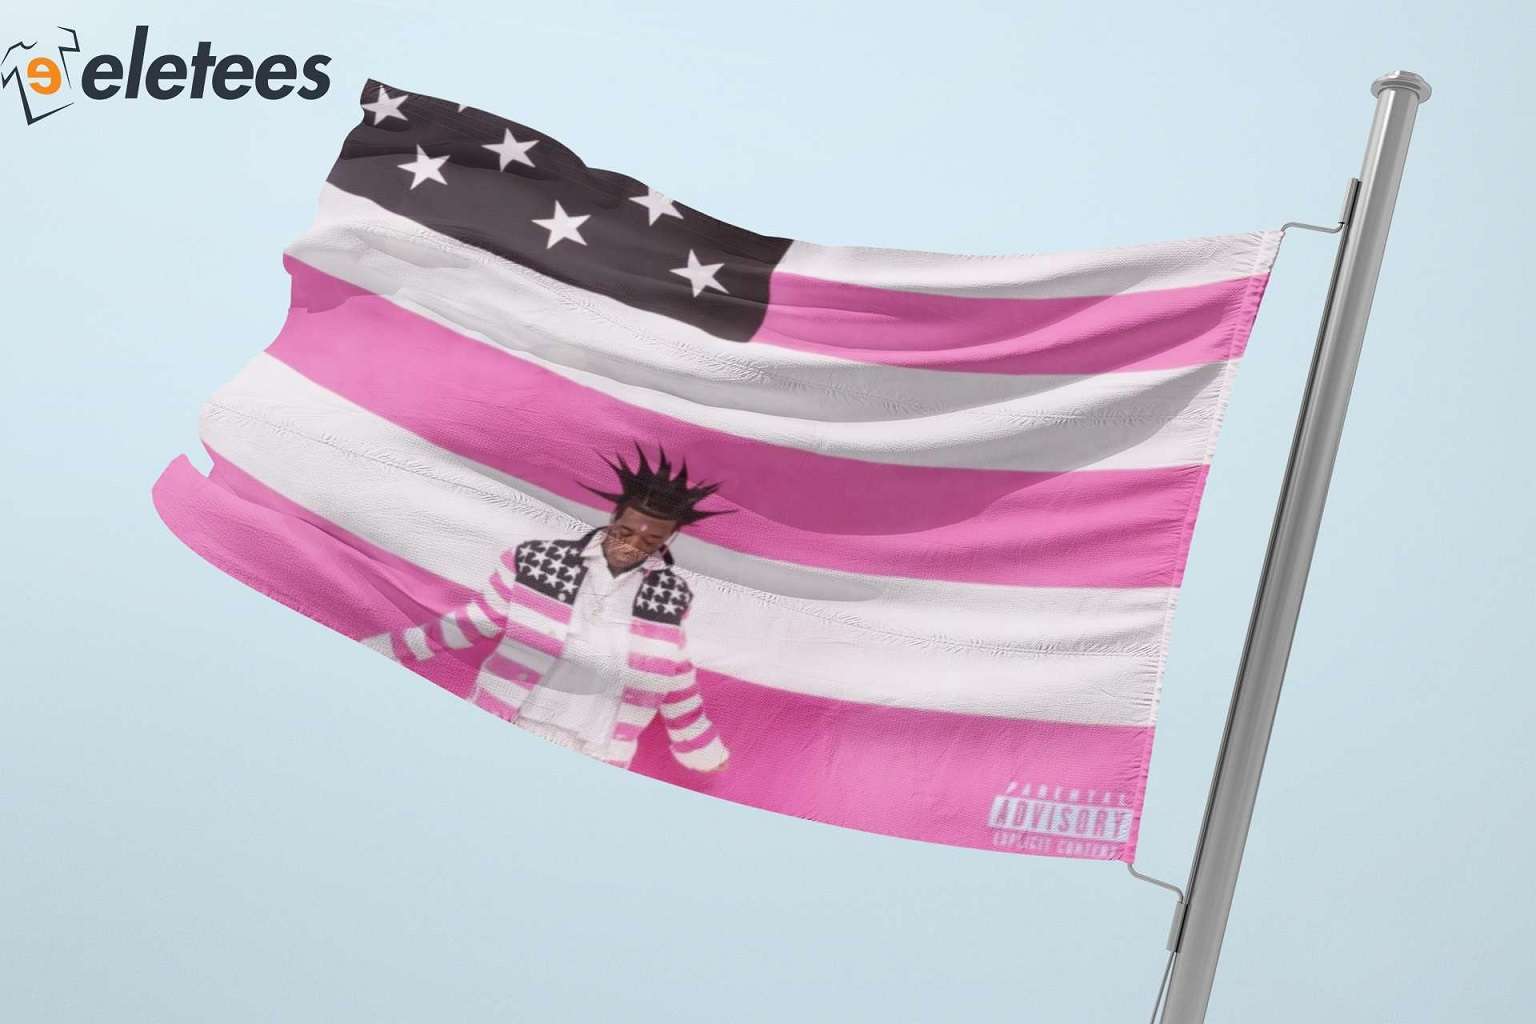 Lil Uzi Vert Shares More 'The Pink Tape' Details